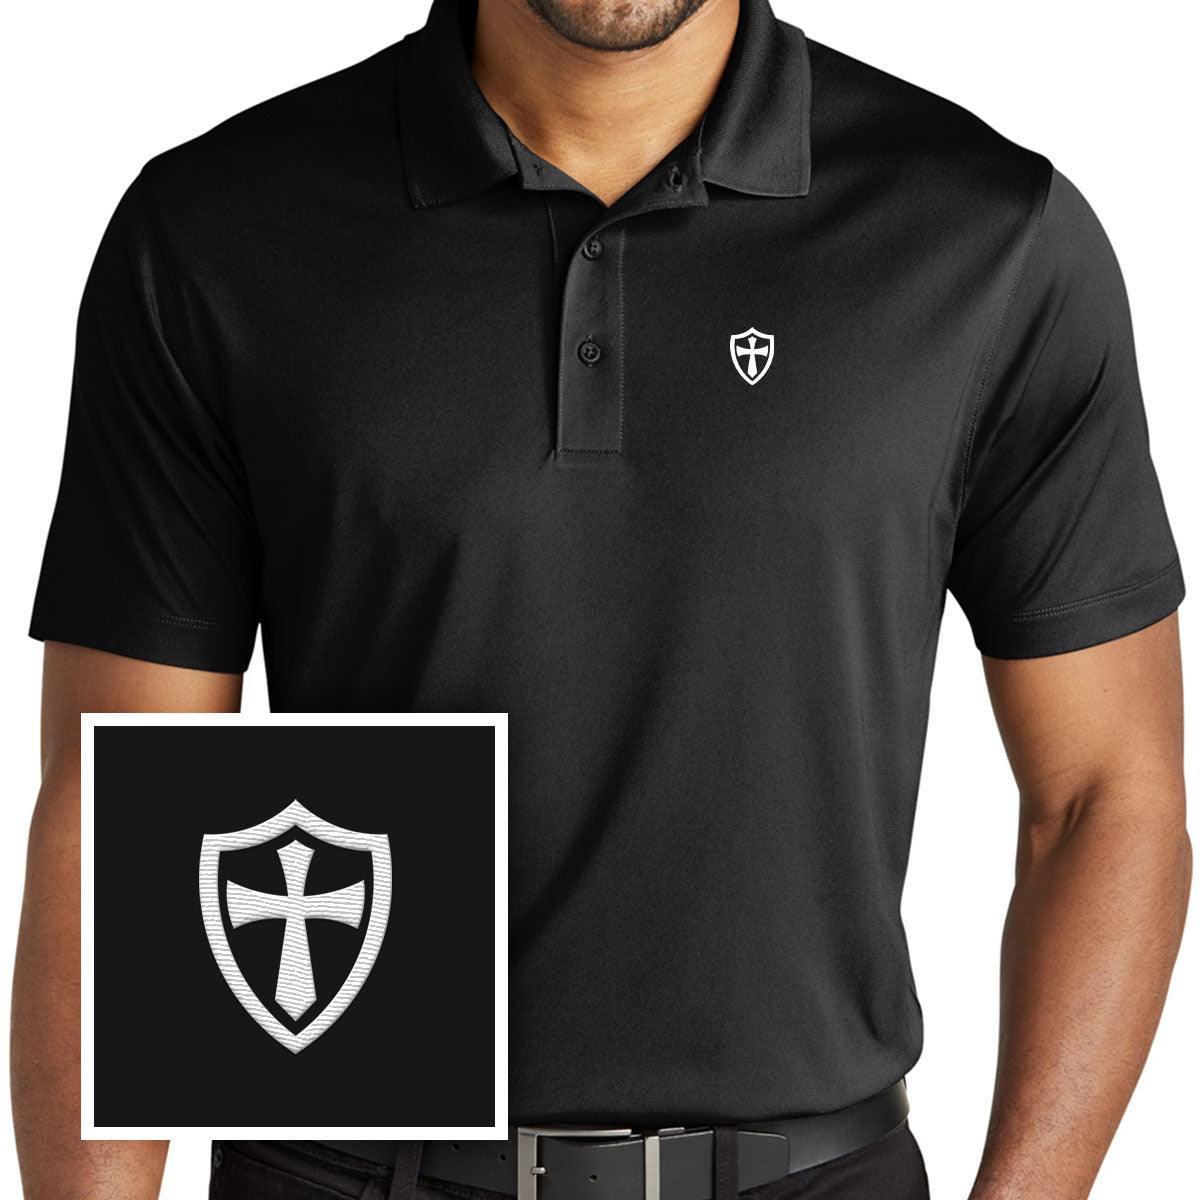 Cross Shield Performance Polo Shirt - Our True God